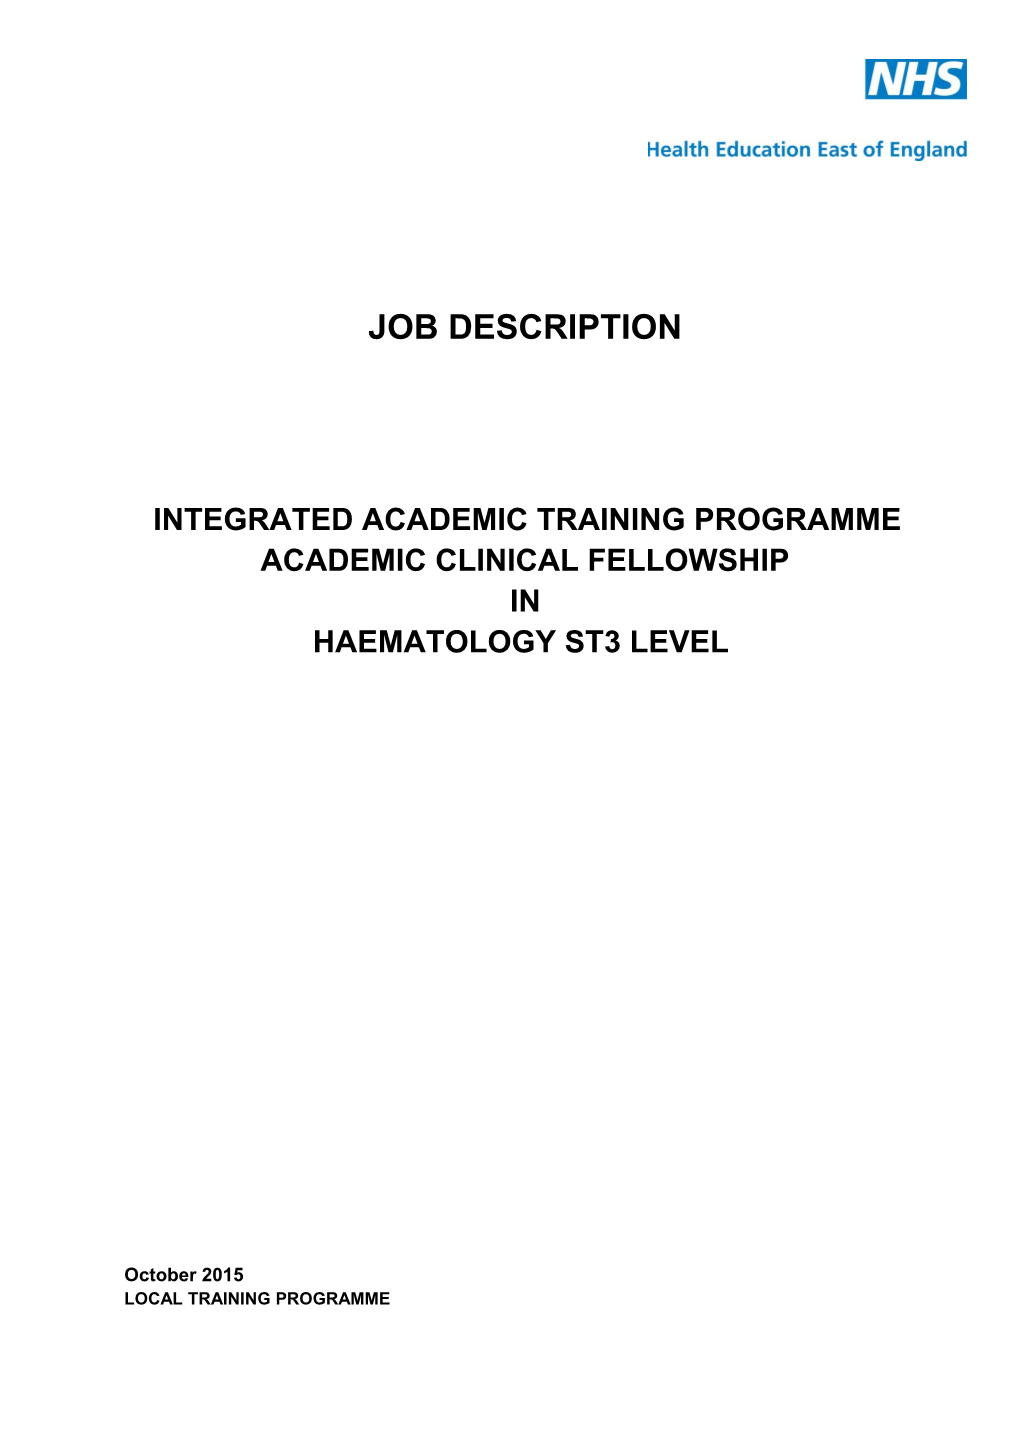 Job Description for a Calman Specialist Registrar in Haematology at the Ipswich Hospital